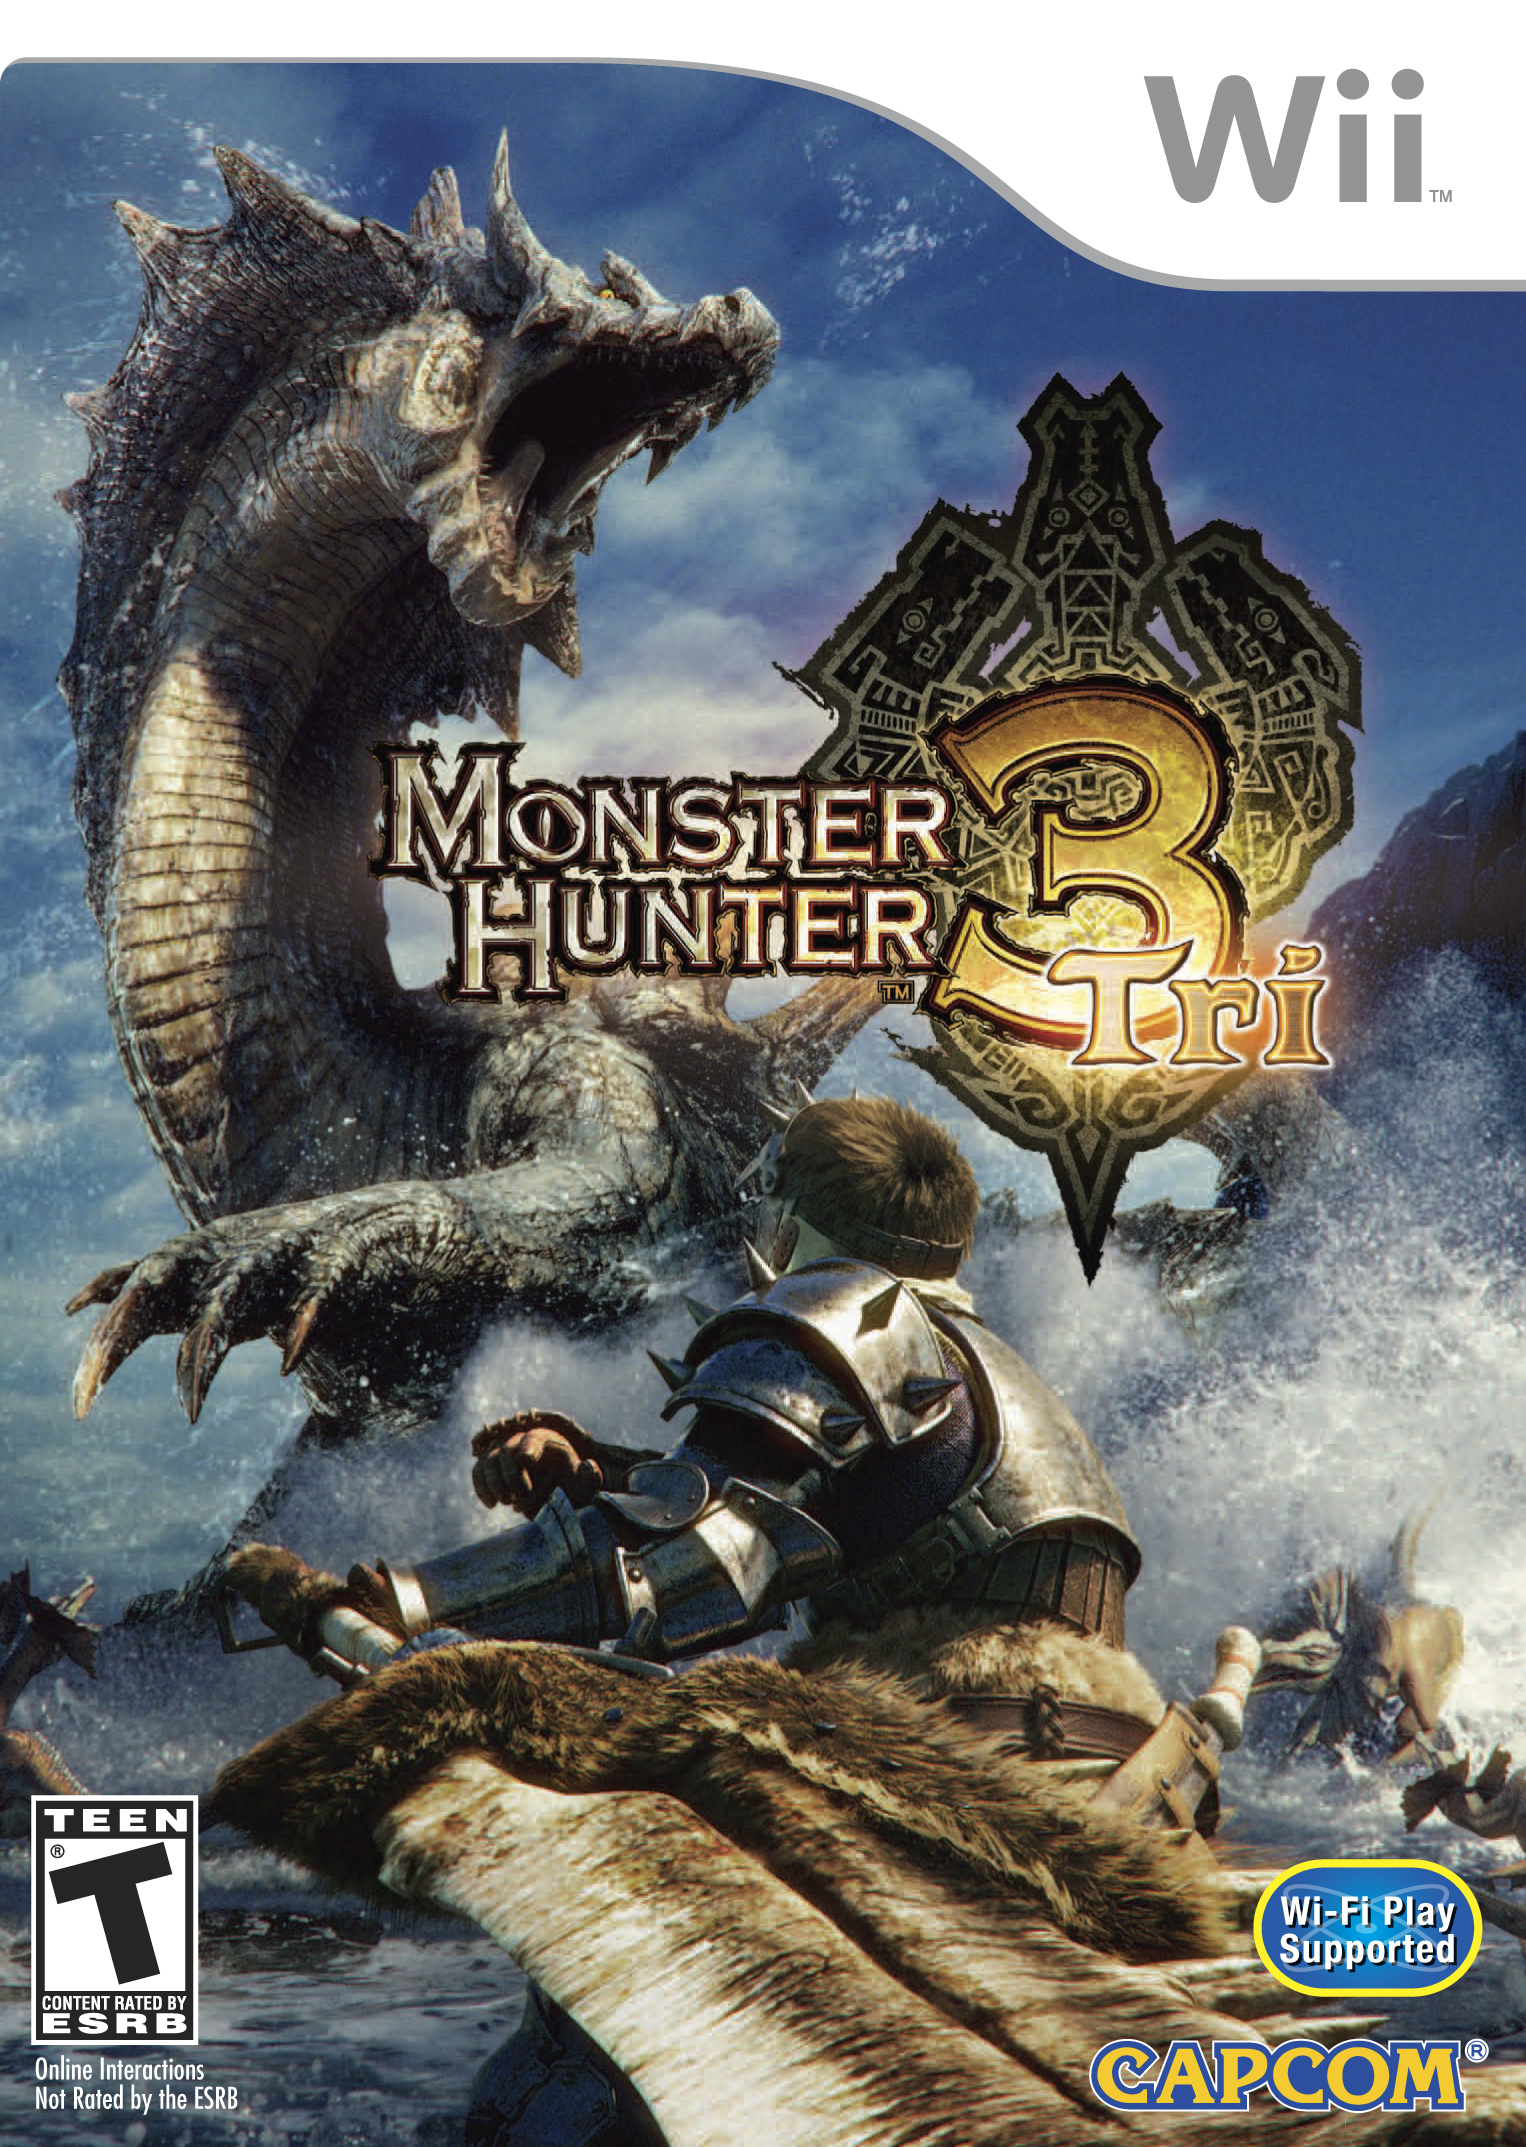 Monster Hunter Tri Wii Servers Shutting Down Today - My Nintendo News